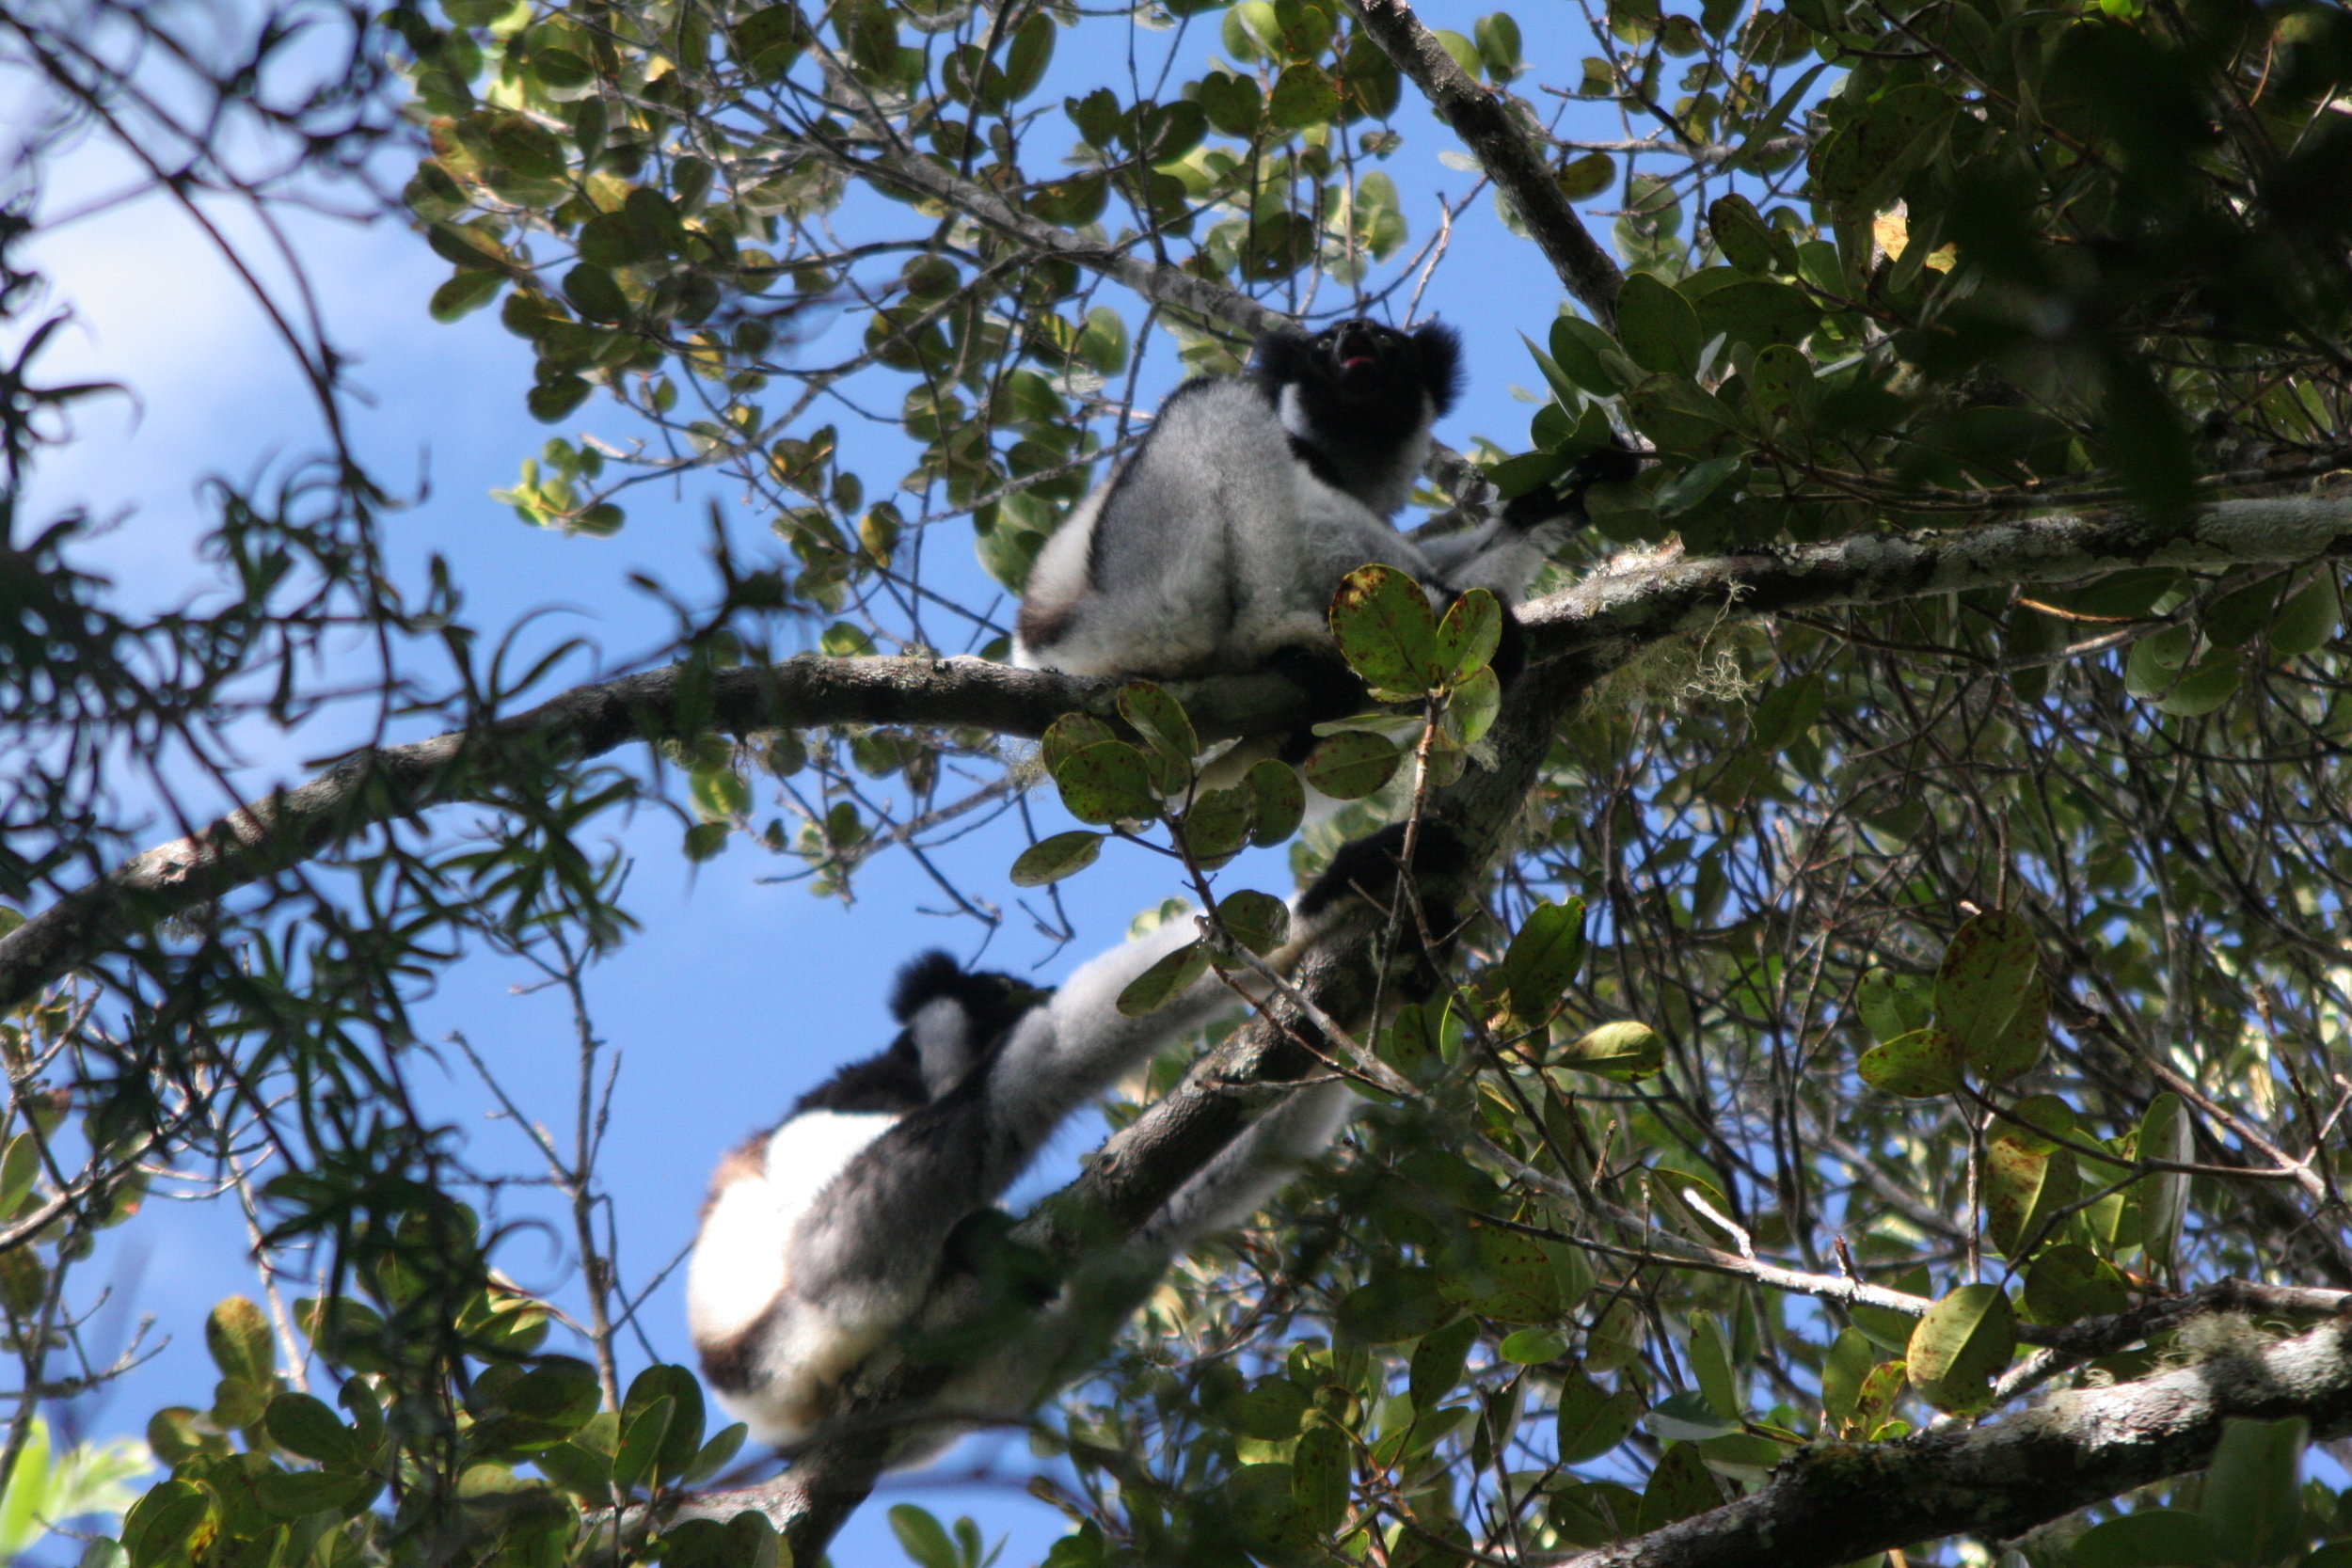 BBC World Service, Madagascar 2009: Preserving the lemur